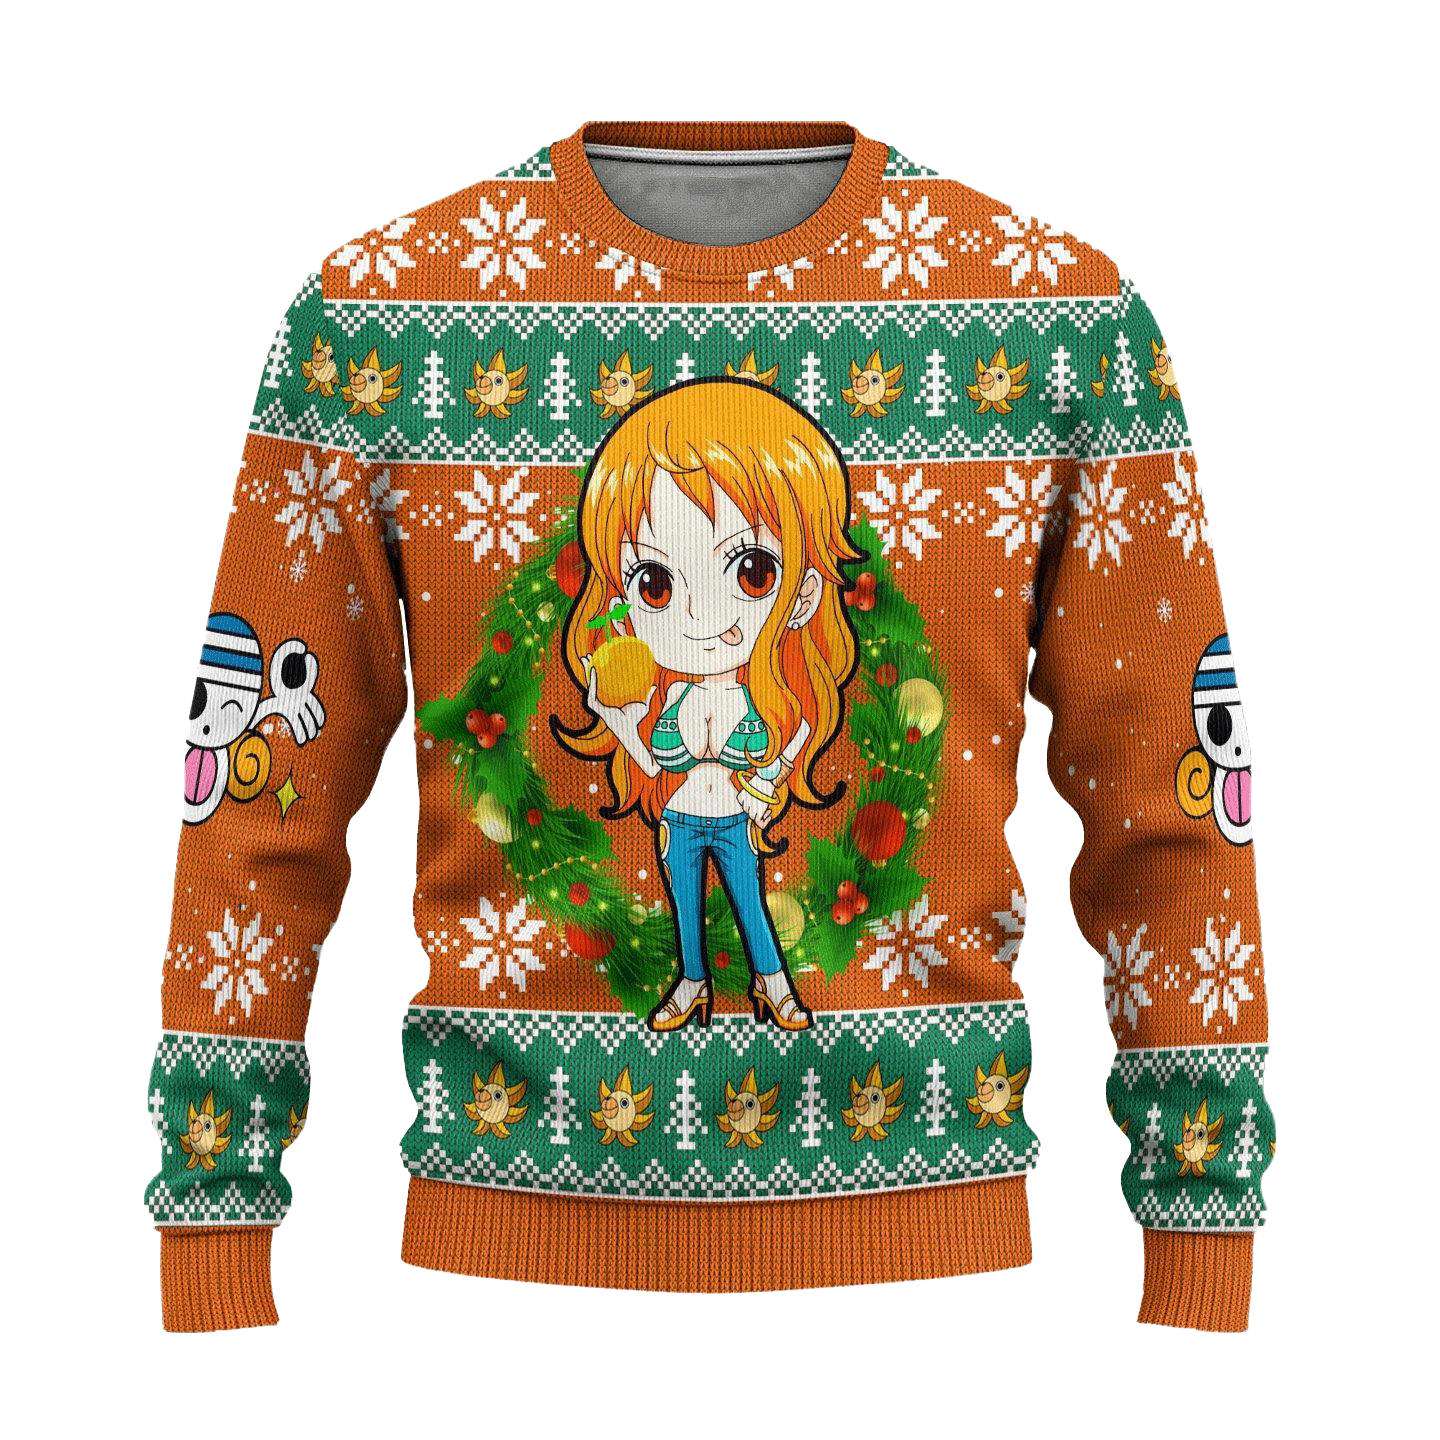 Nami One Piece Anime Ugly Christmas Sweater Xmas Gift